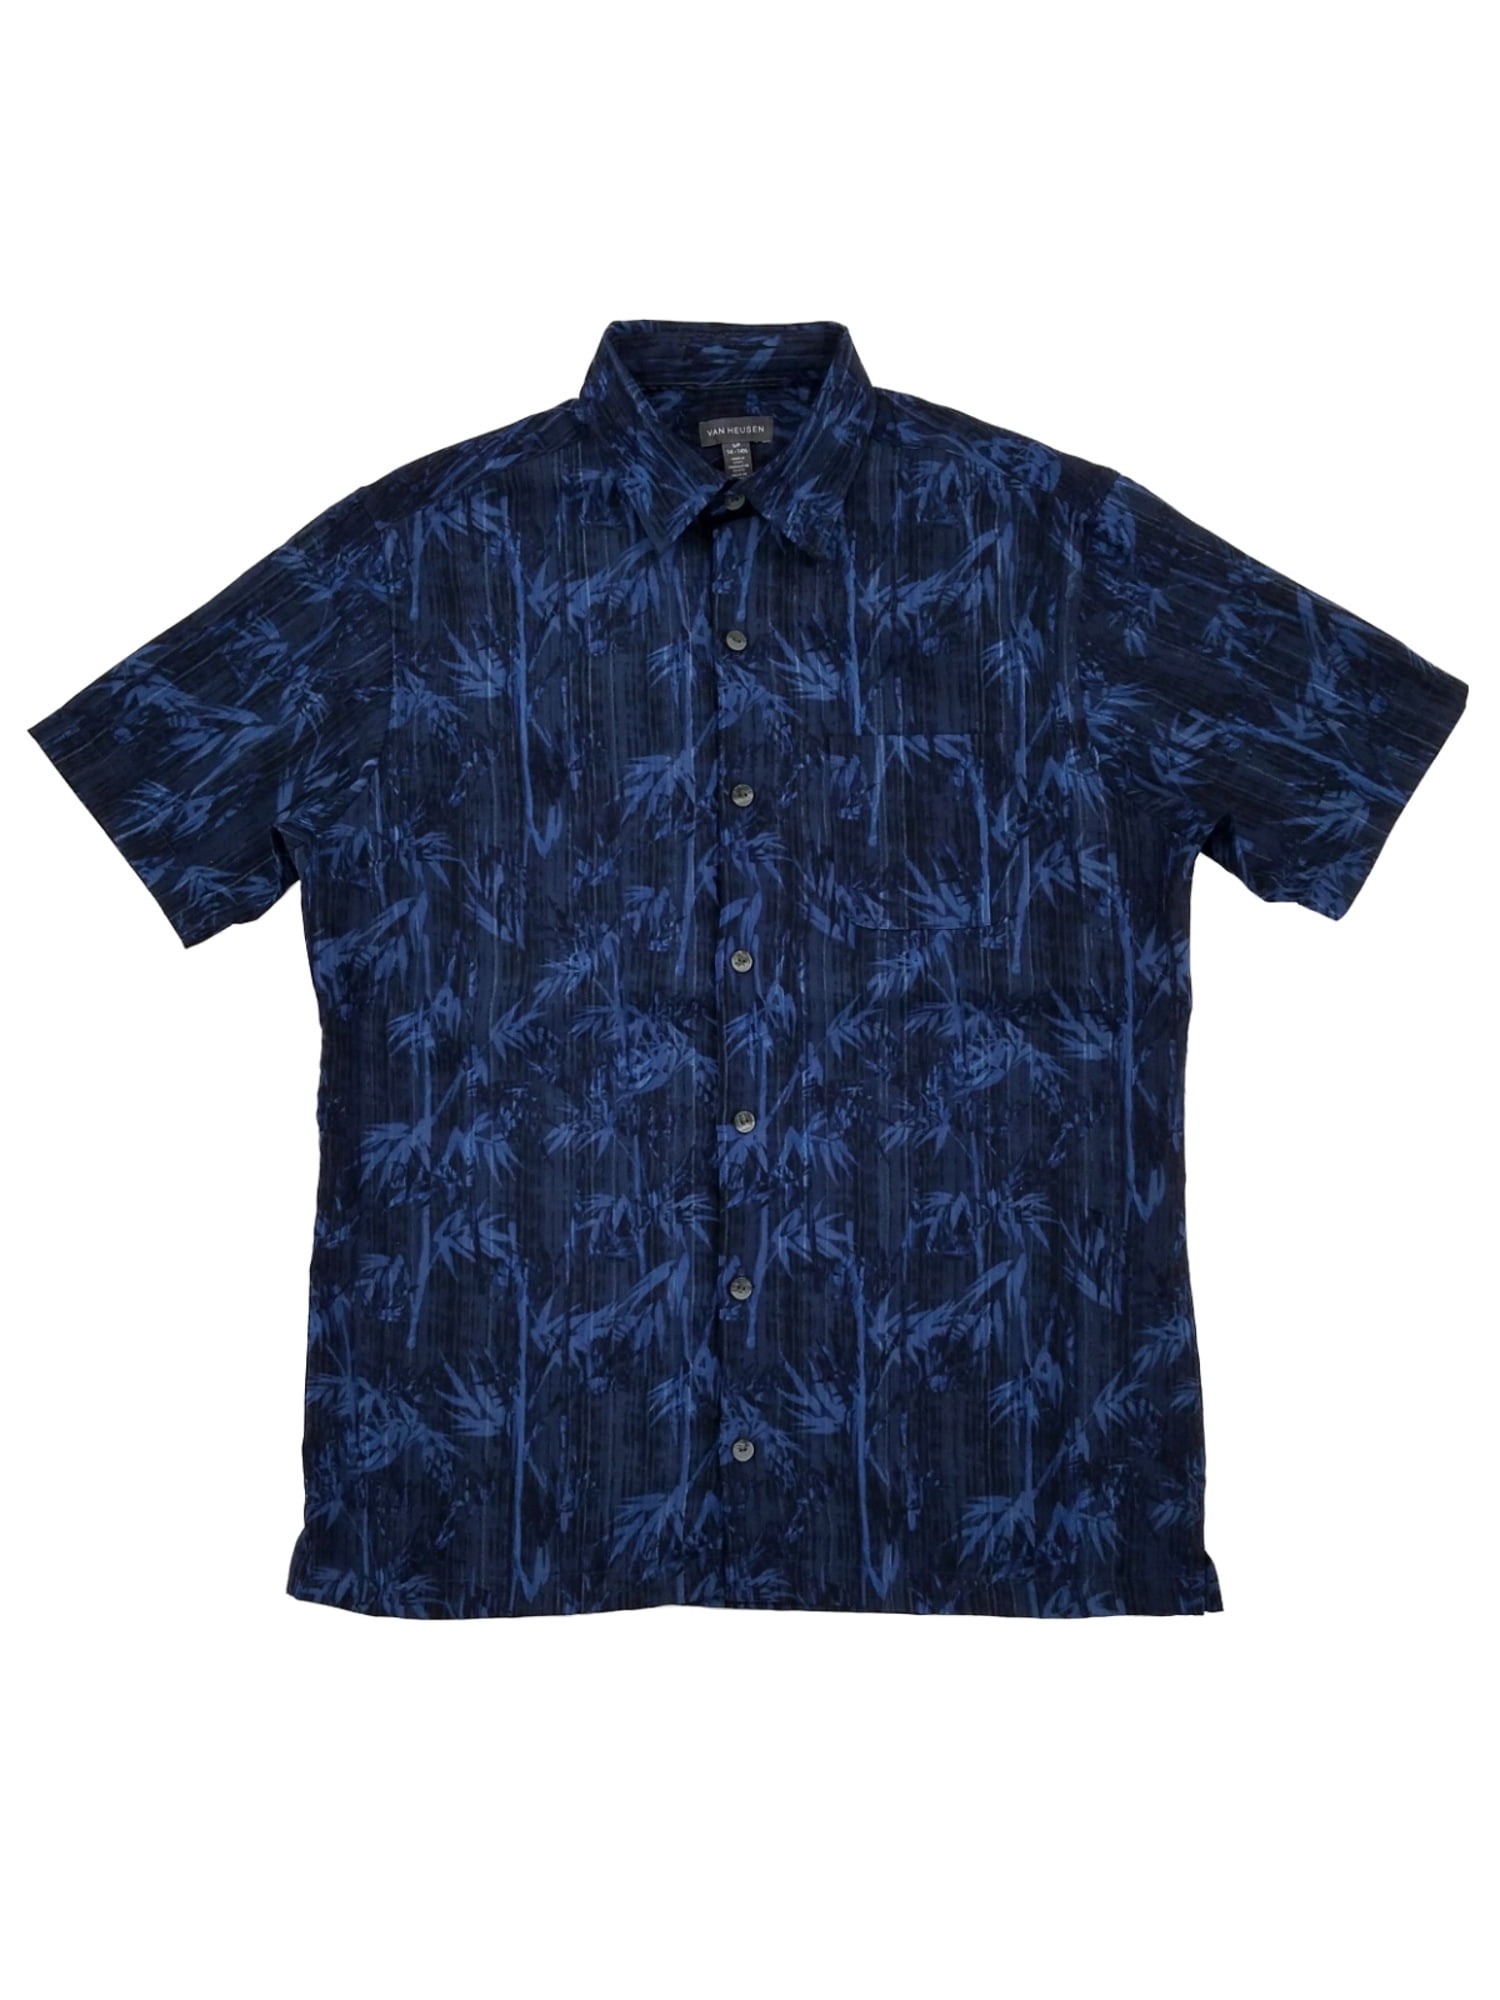 Van Heusen Mens Air Tropical Short Sleeve Button Down Poly Rayon Shirt